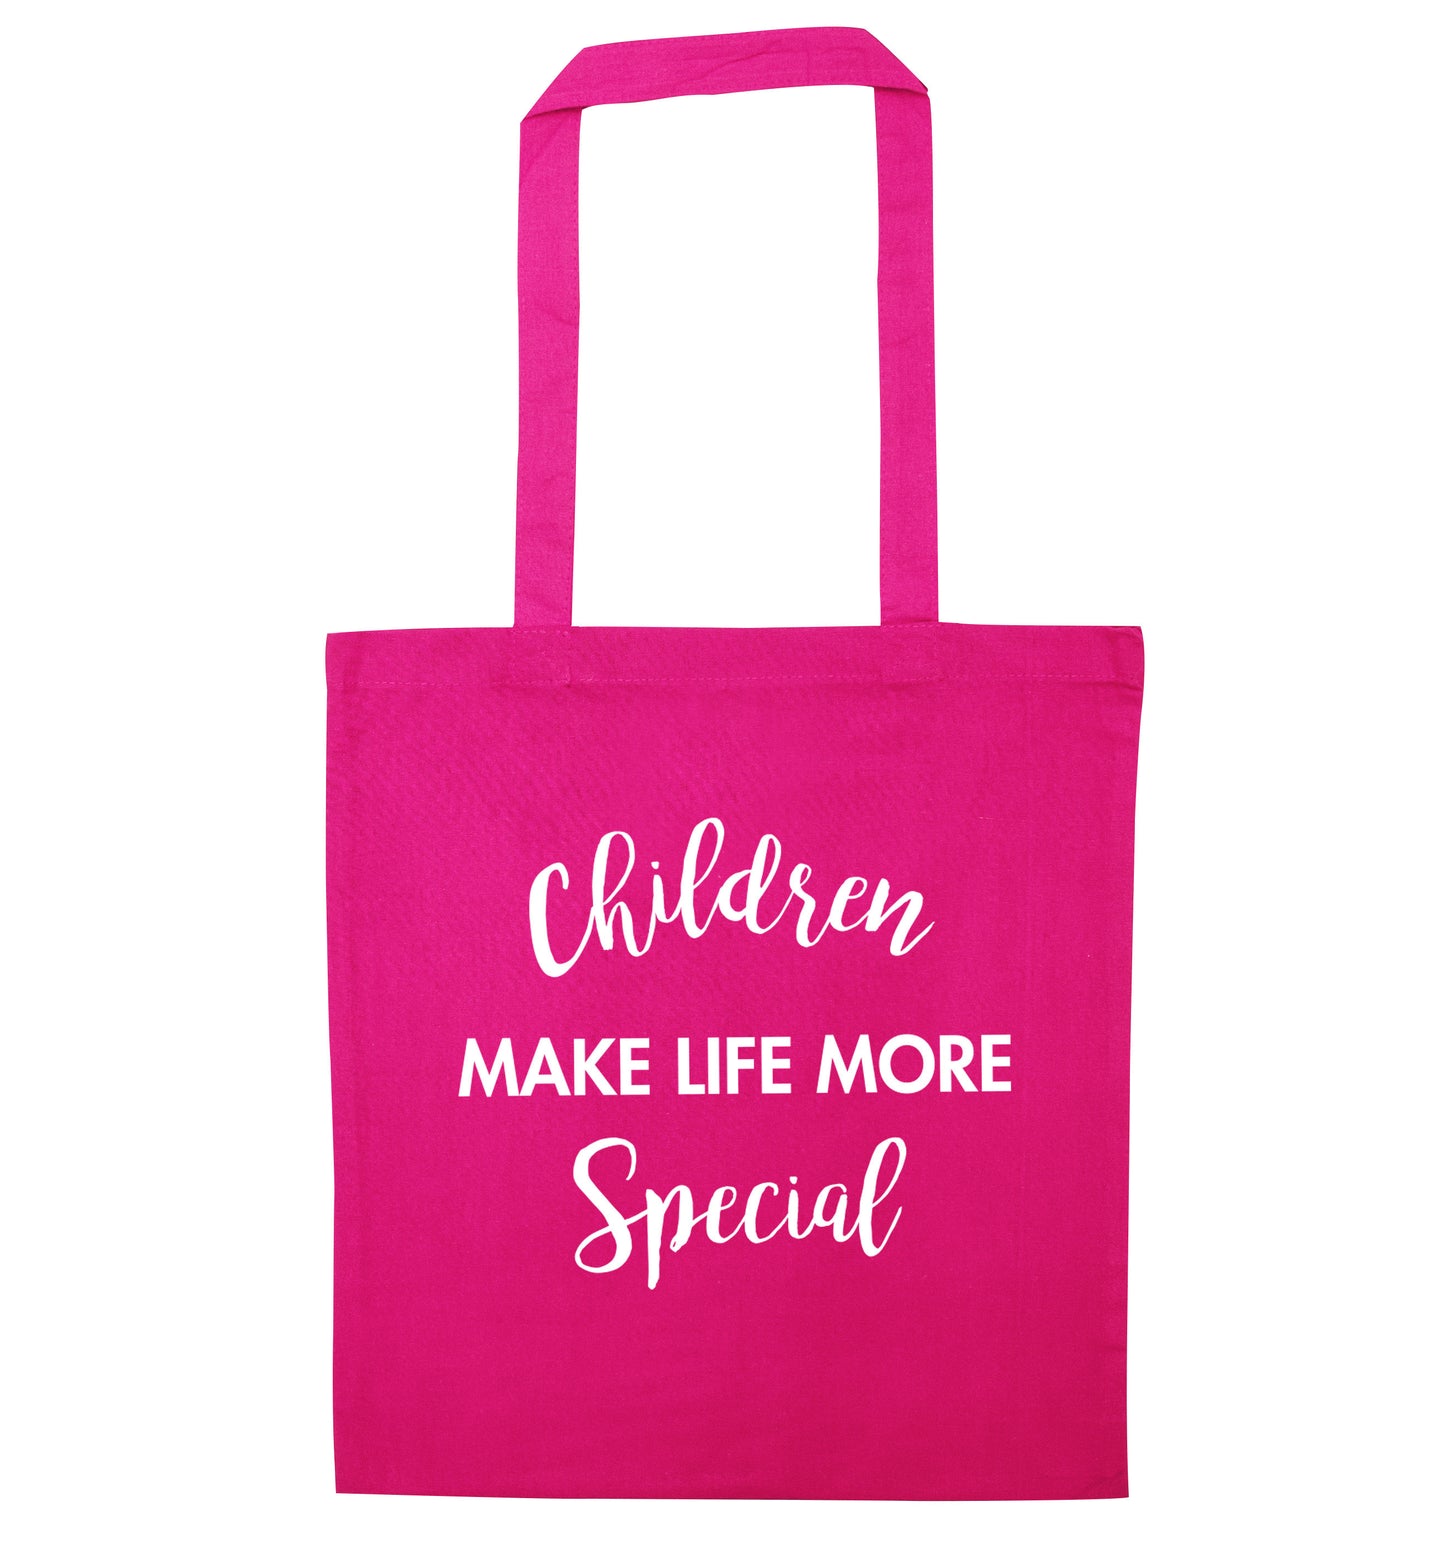 Children make life more special pink tote bag